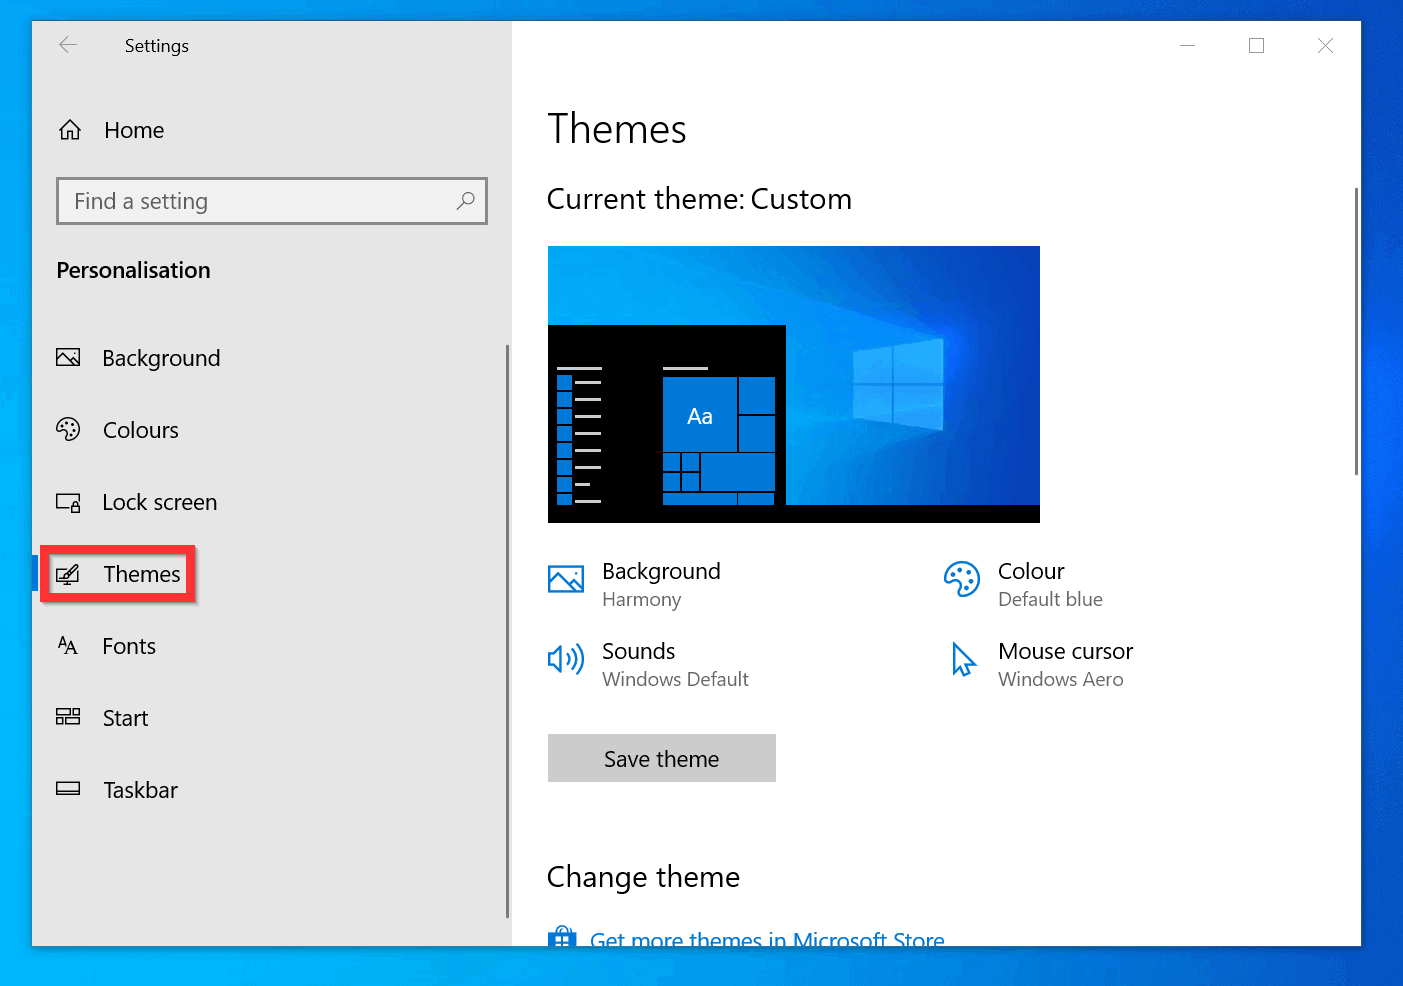 windows 10 folder icon changer